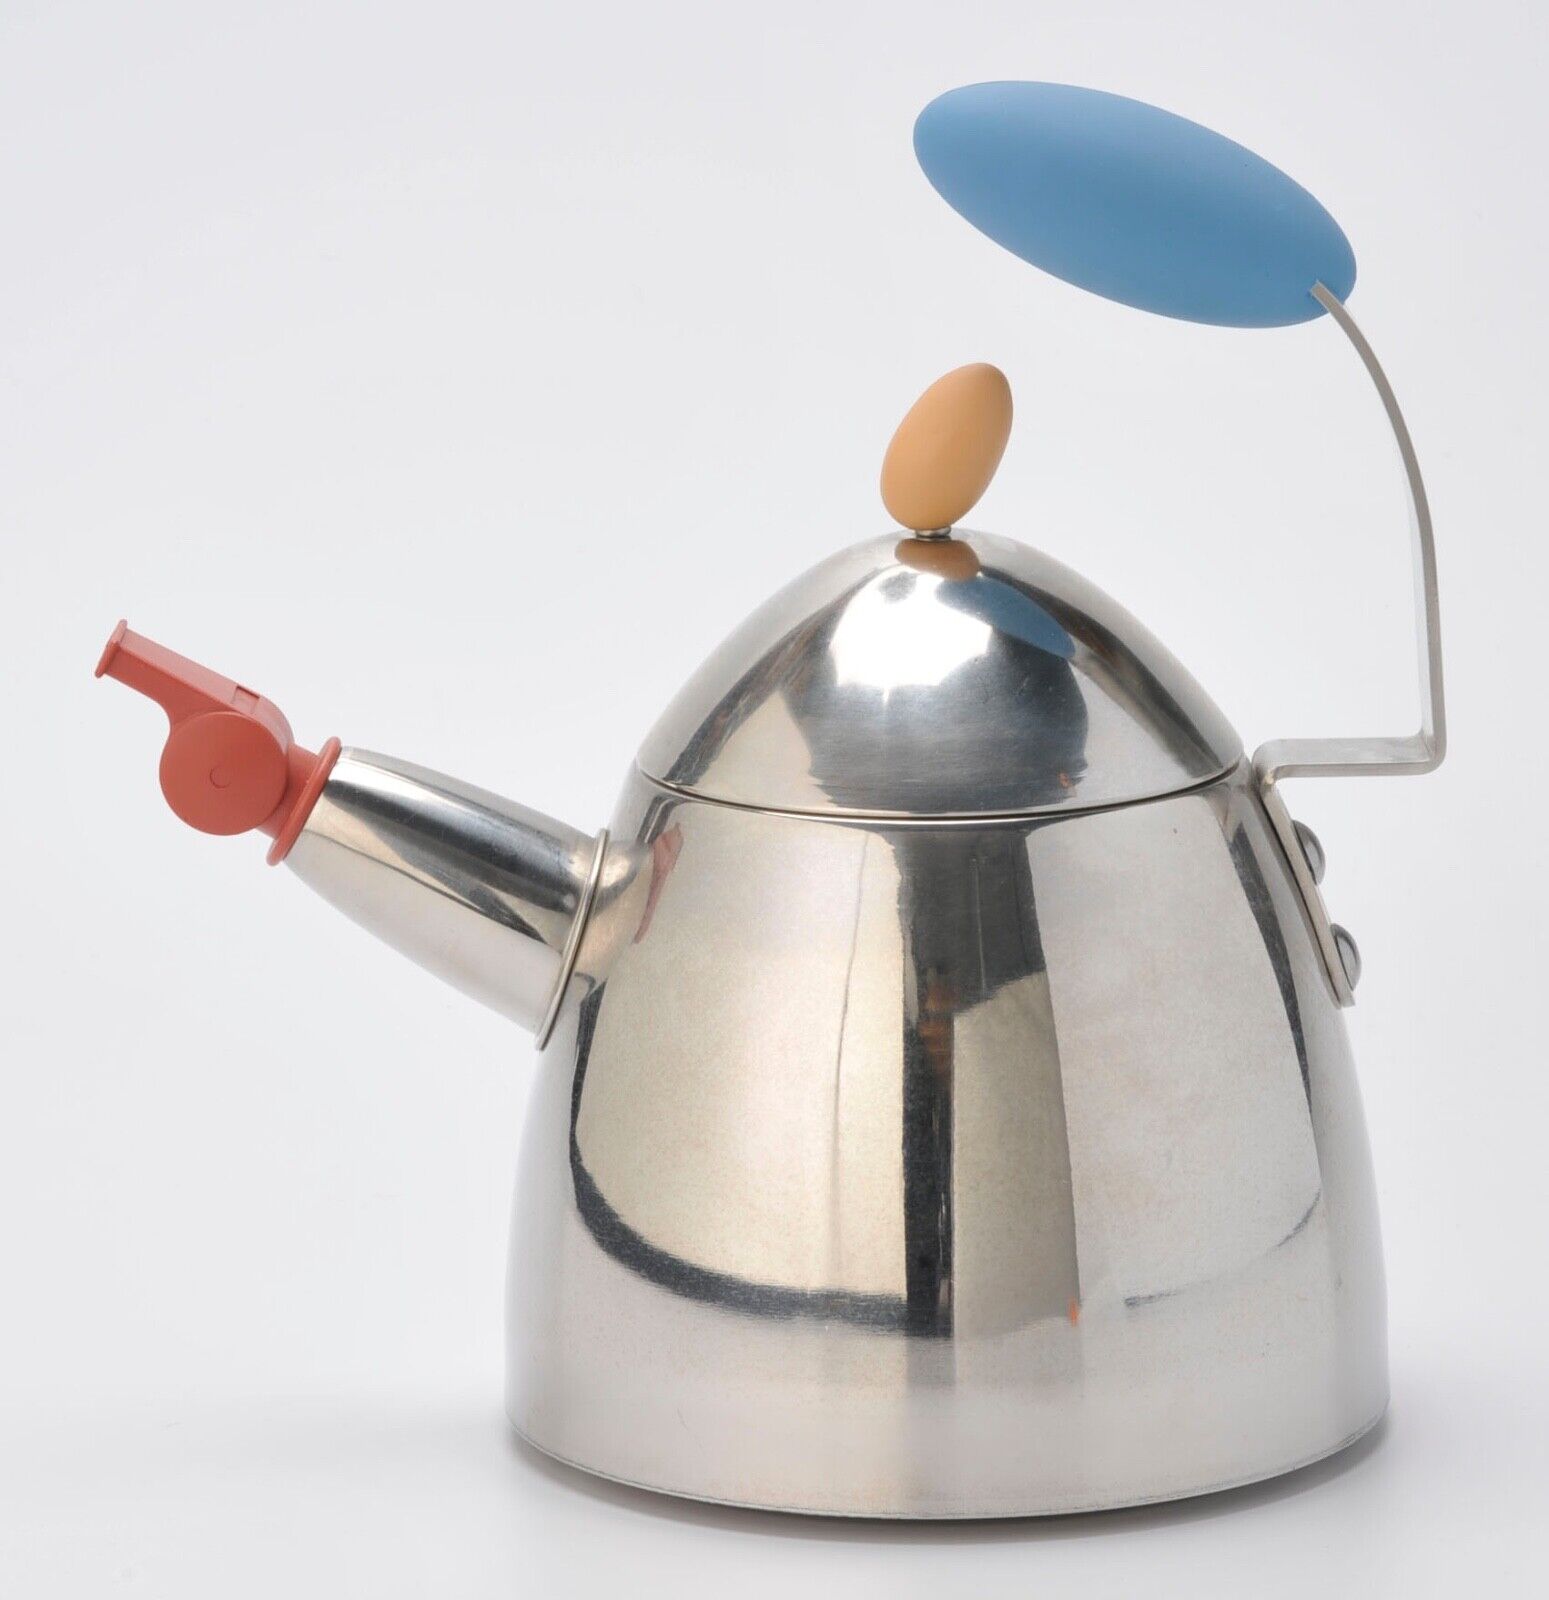 Vintage Michael Graves Stainless Steel Tea Kettle With Whistle Spout Teapot 3 Qt